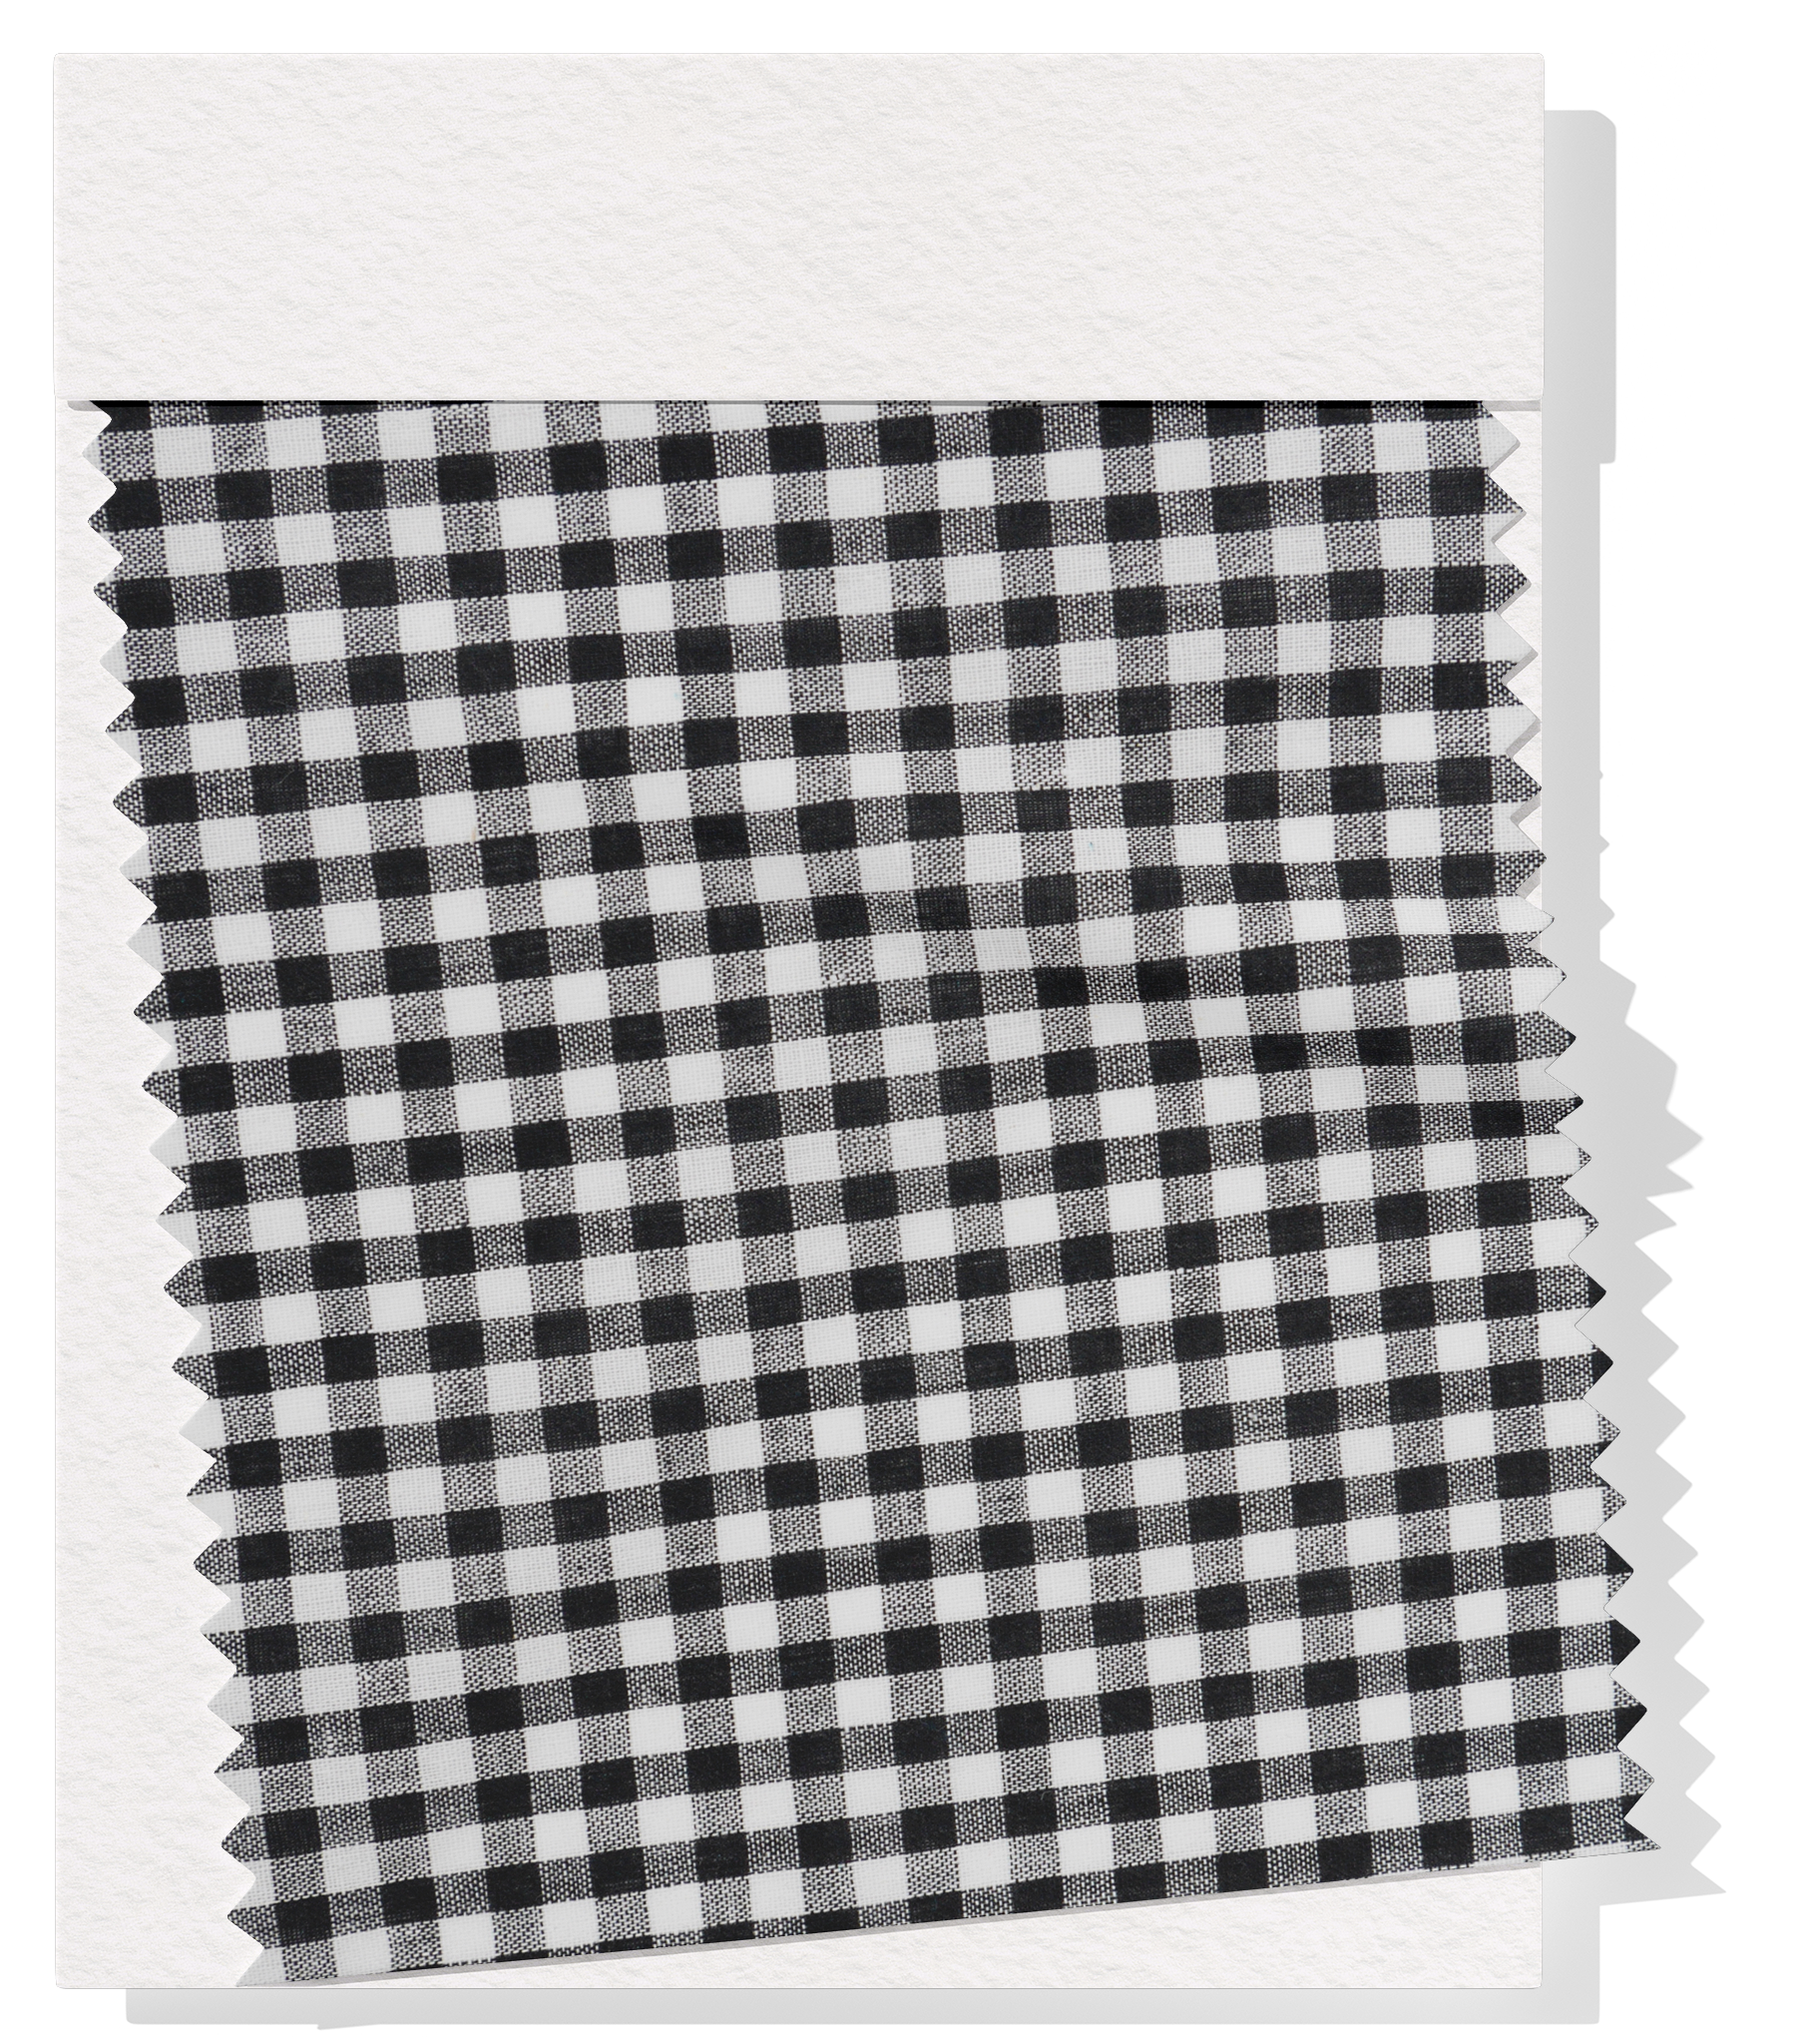 Cotton Gingham Print $14.00p/m - Black & White (Small)